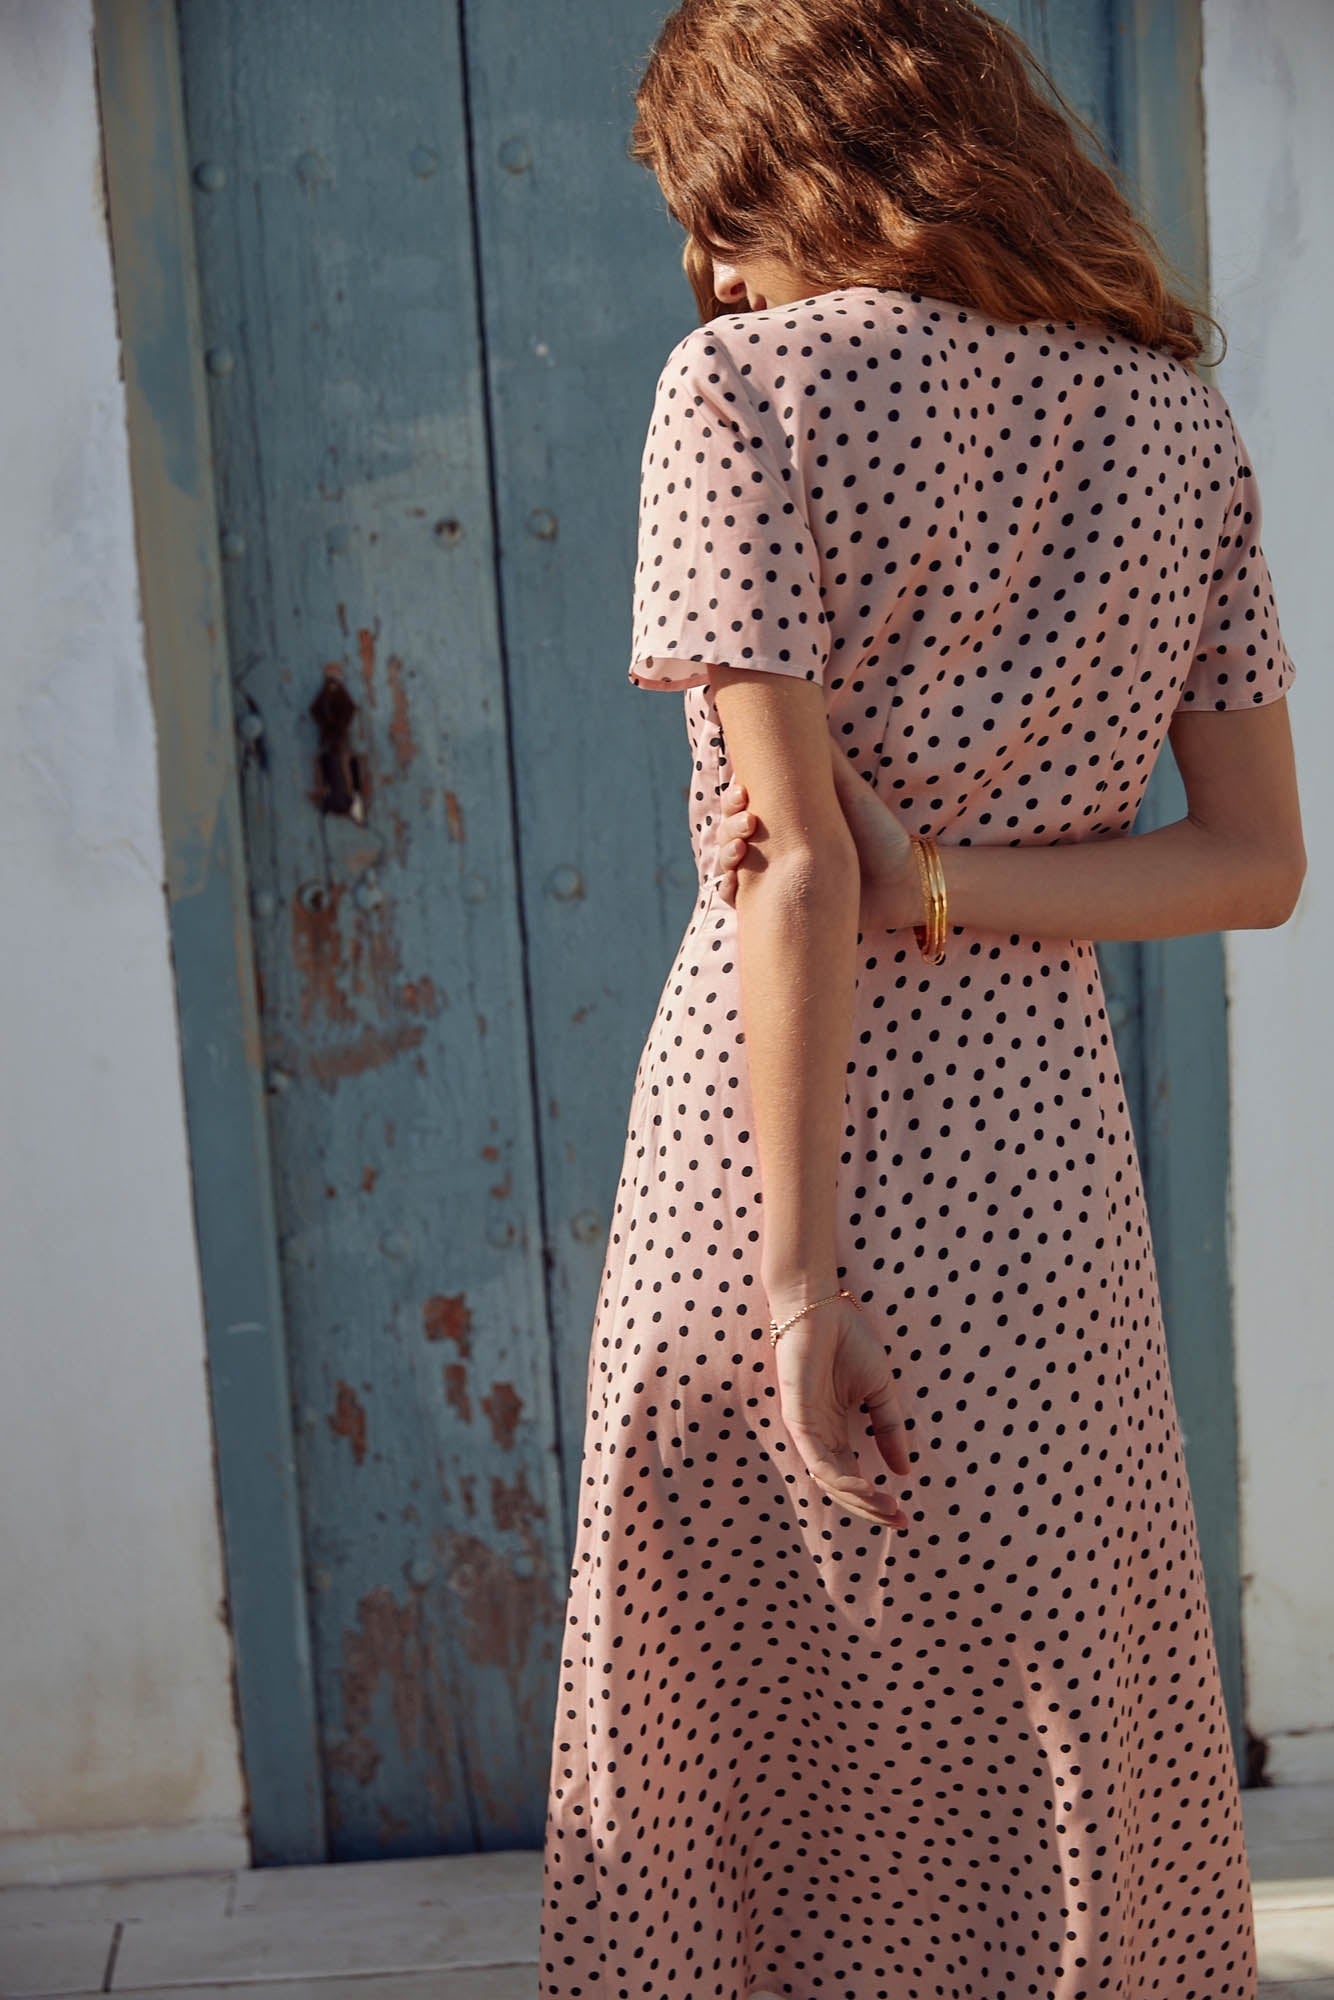 January pink polka dot dress